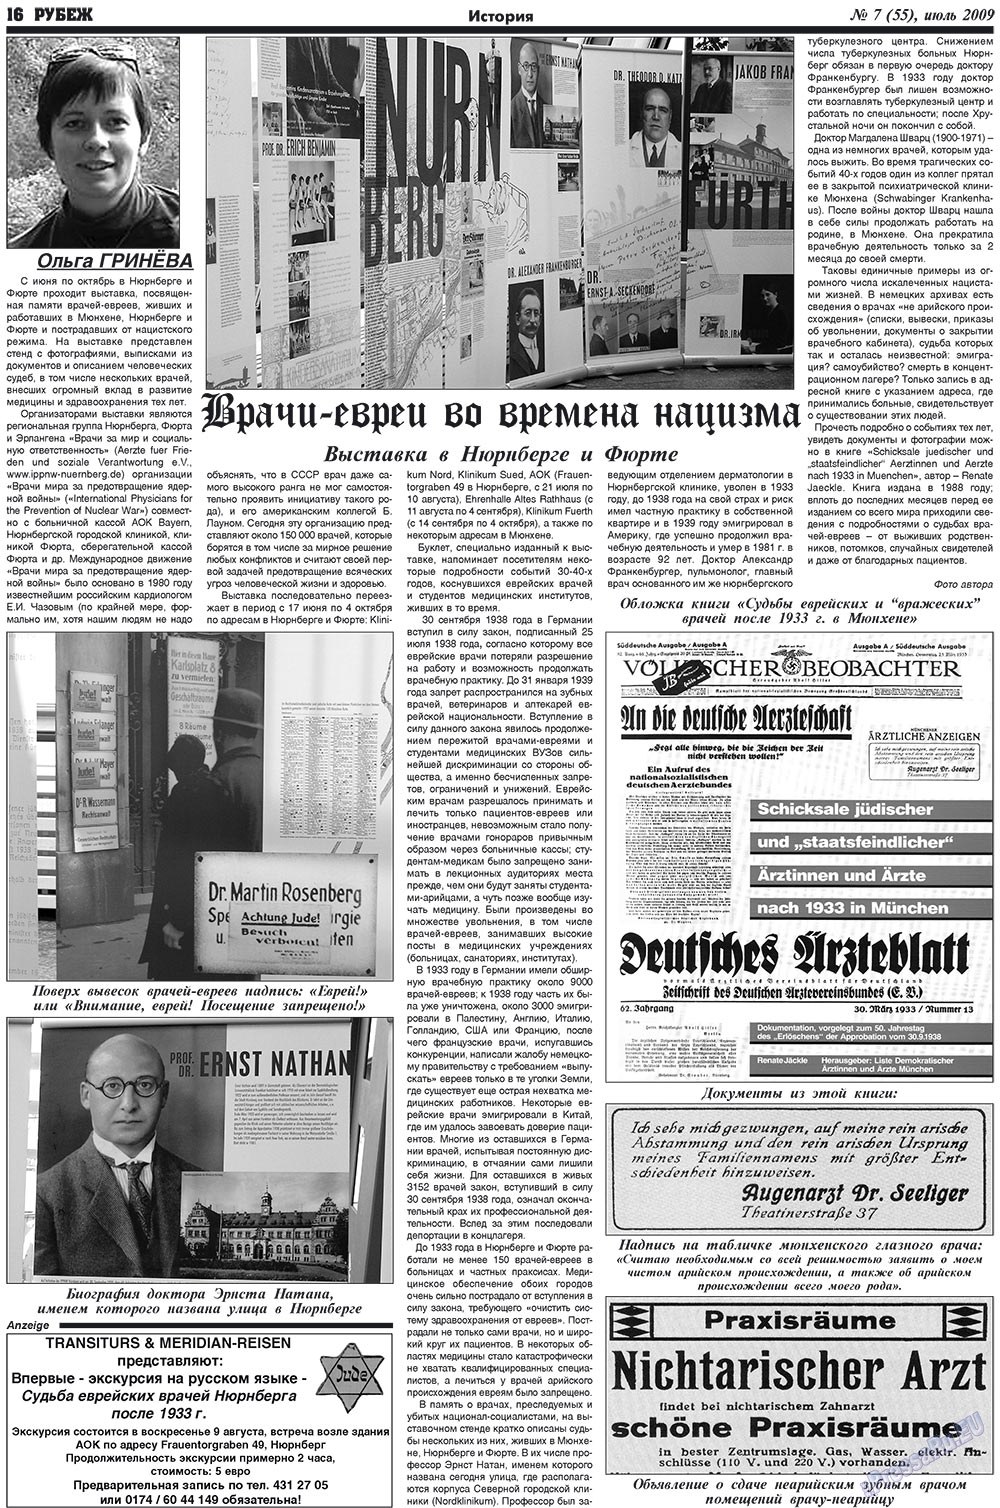 Рубеж, газета. 2009 №7 стр.16